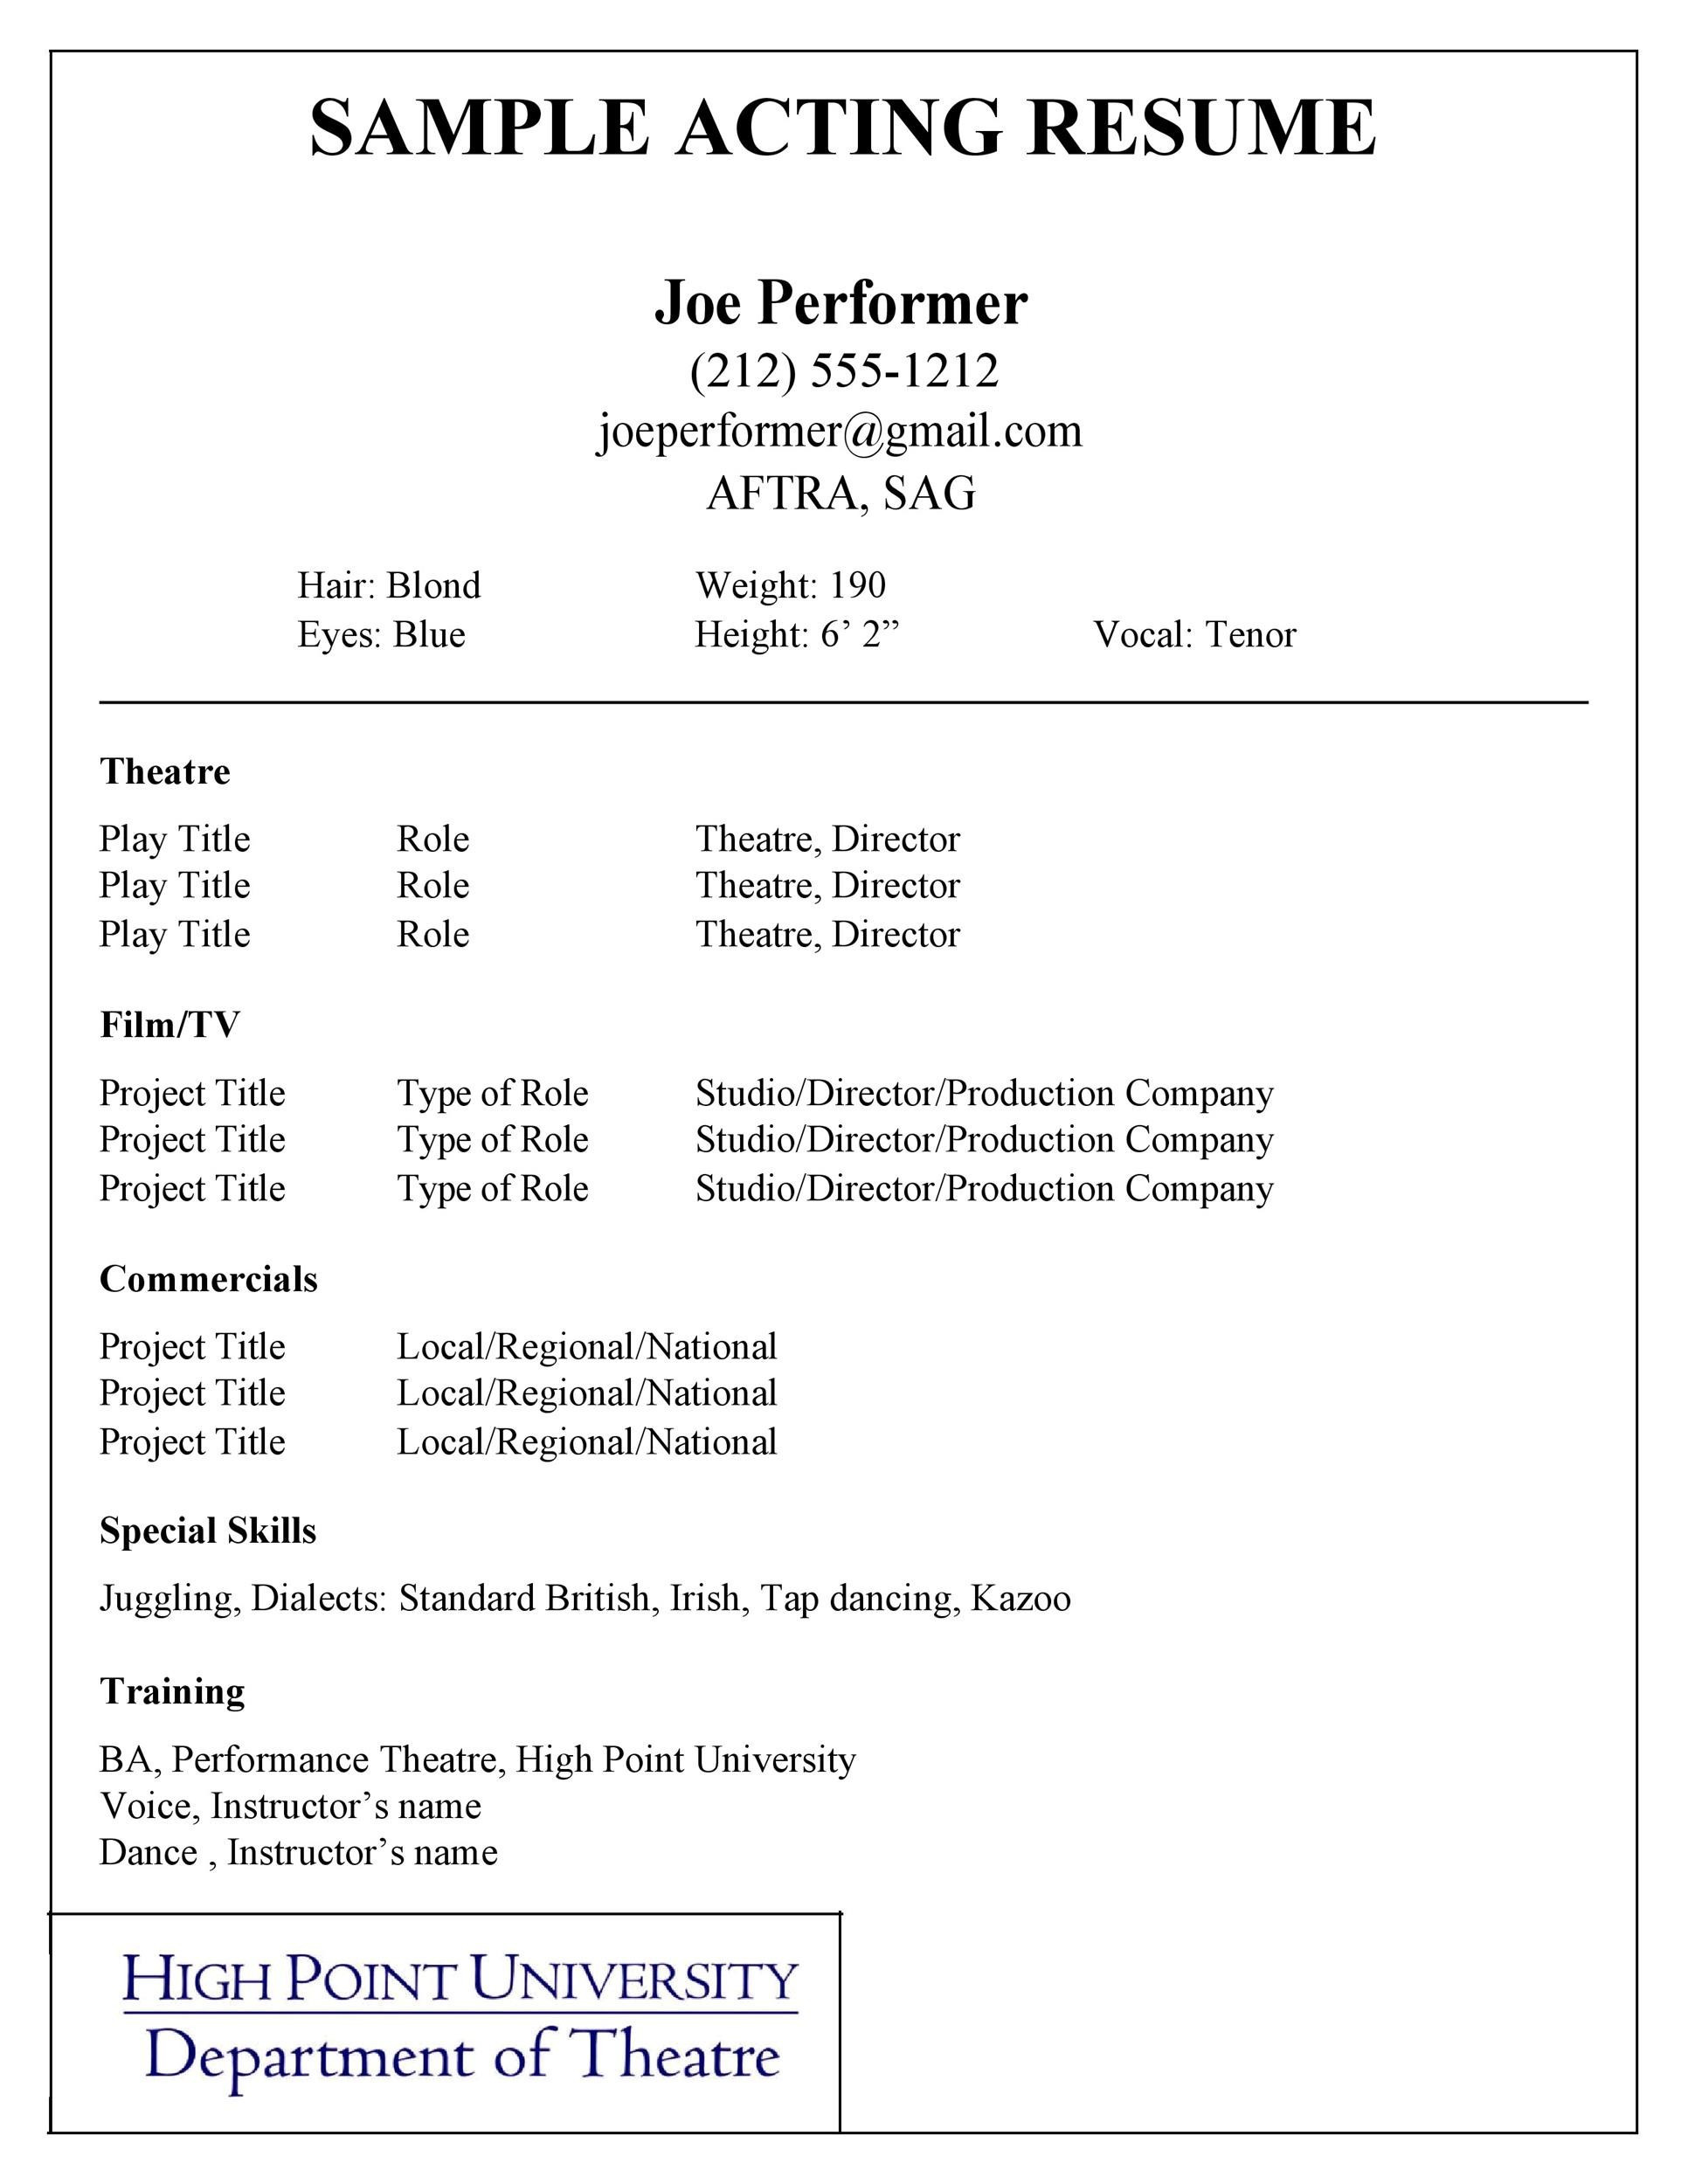 Resume Sample for Rockefeller University Job 50 Free Acting Resume Templates (word & Google Docs) á Templatelab